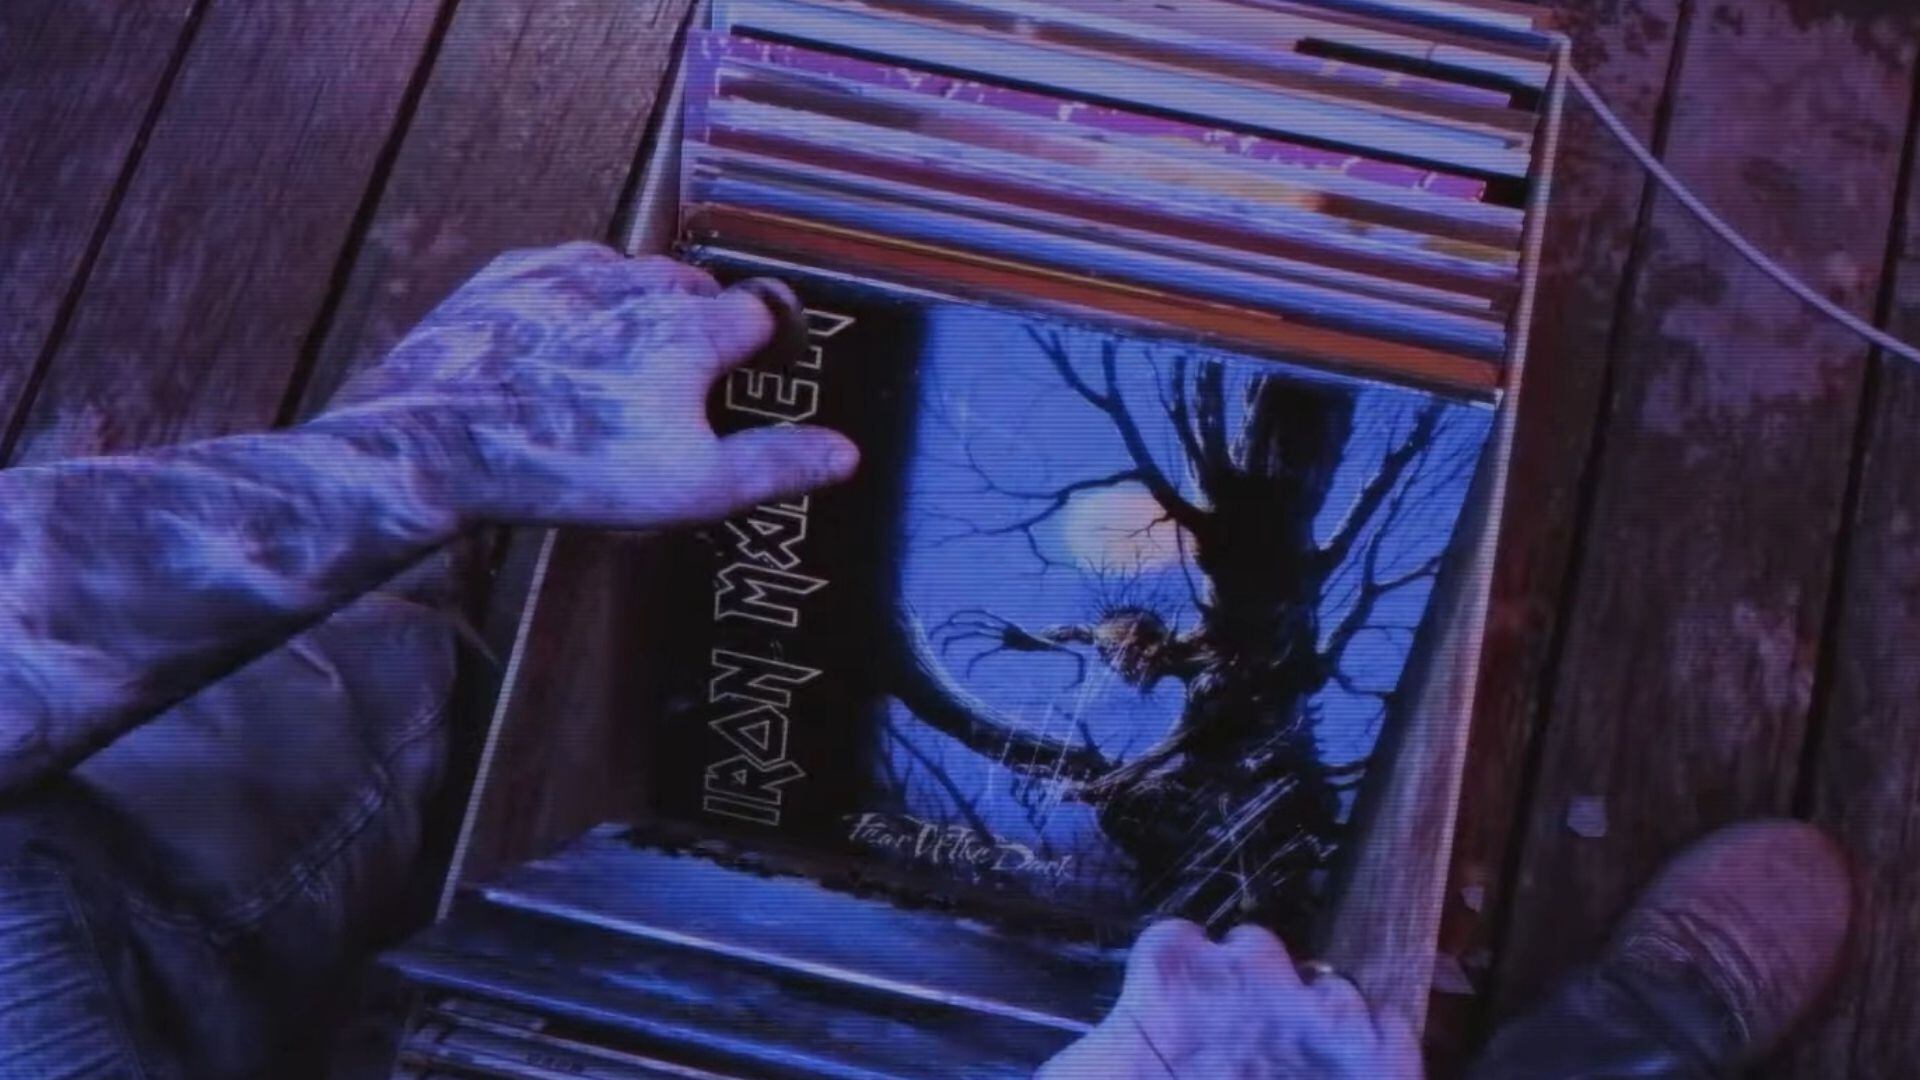 Captura del tráiler oficial de Dead by Daylight (colección de Iron Maiden)